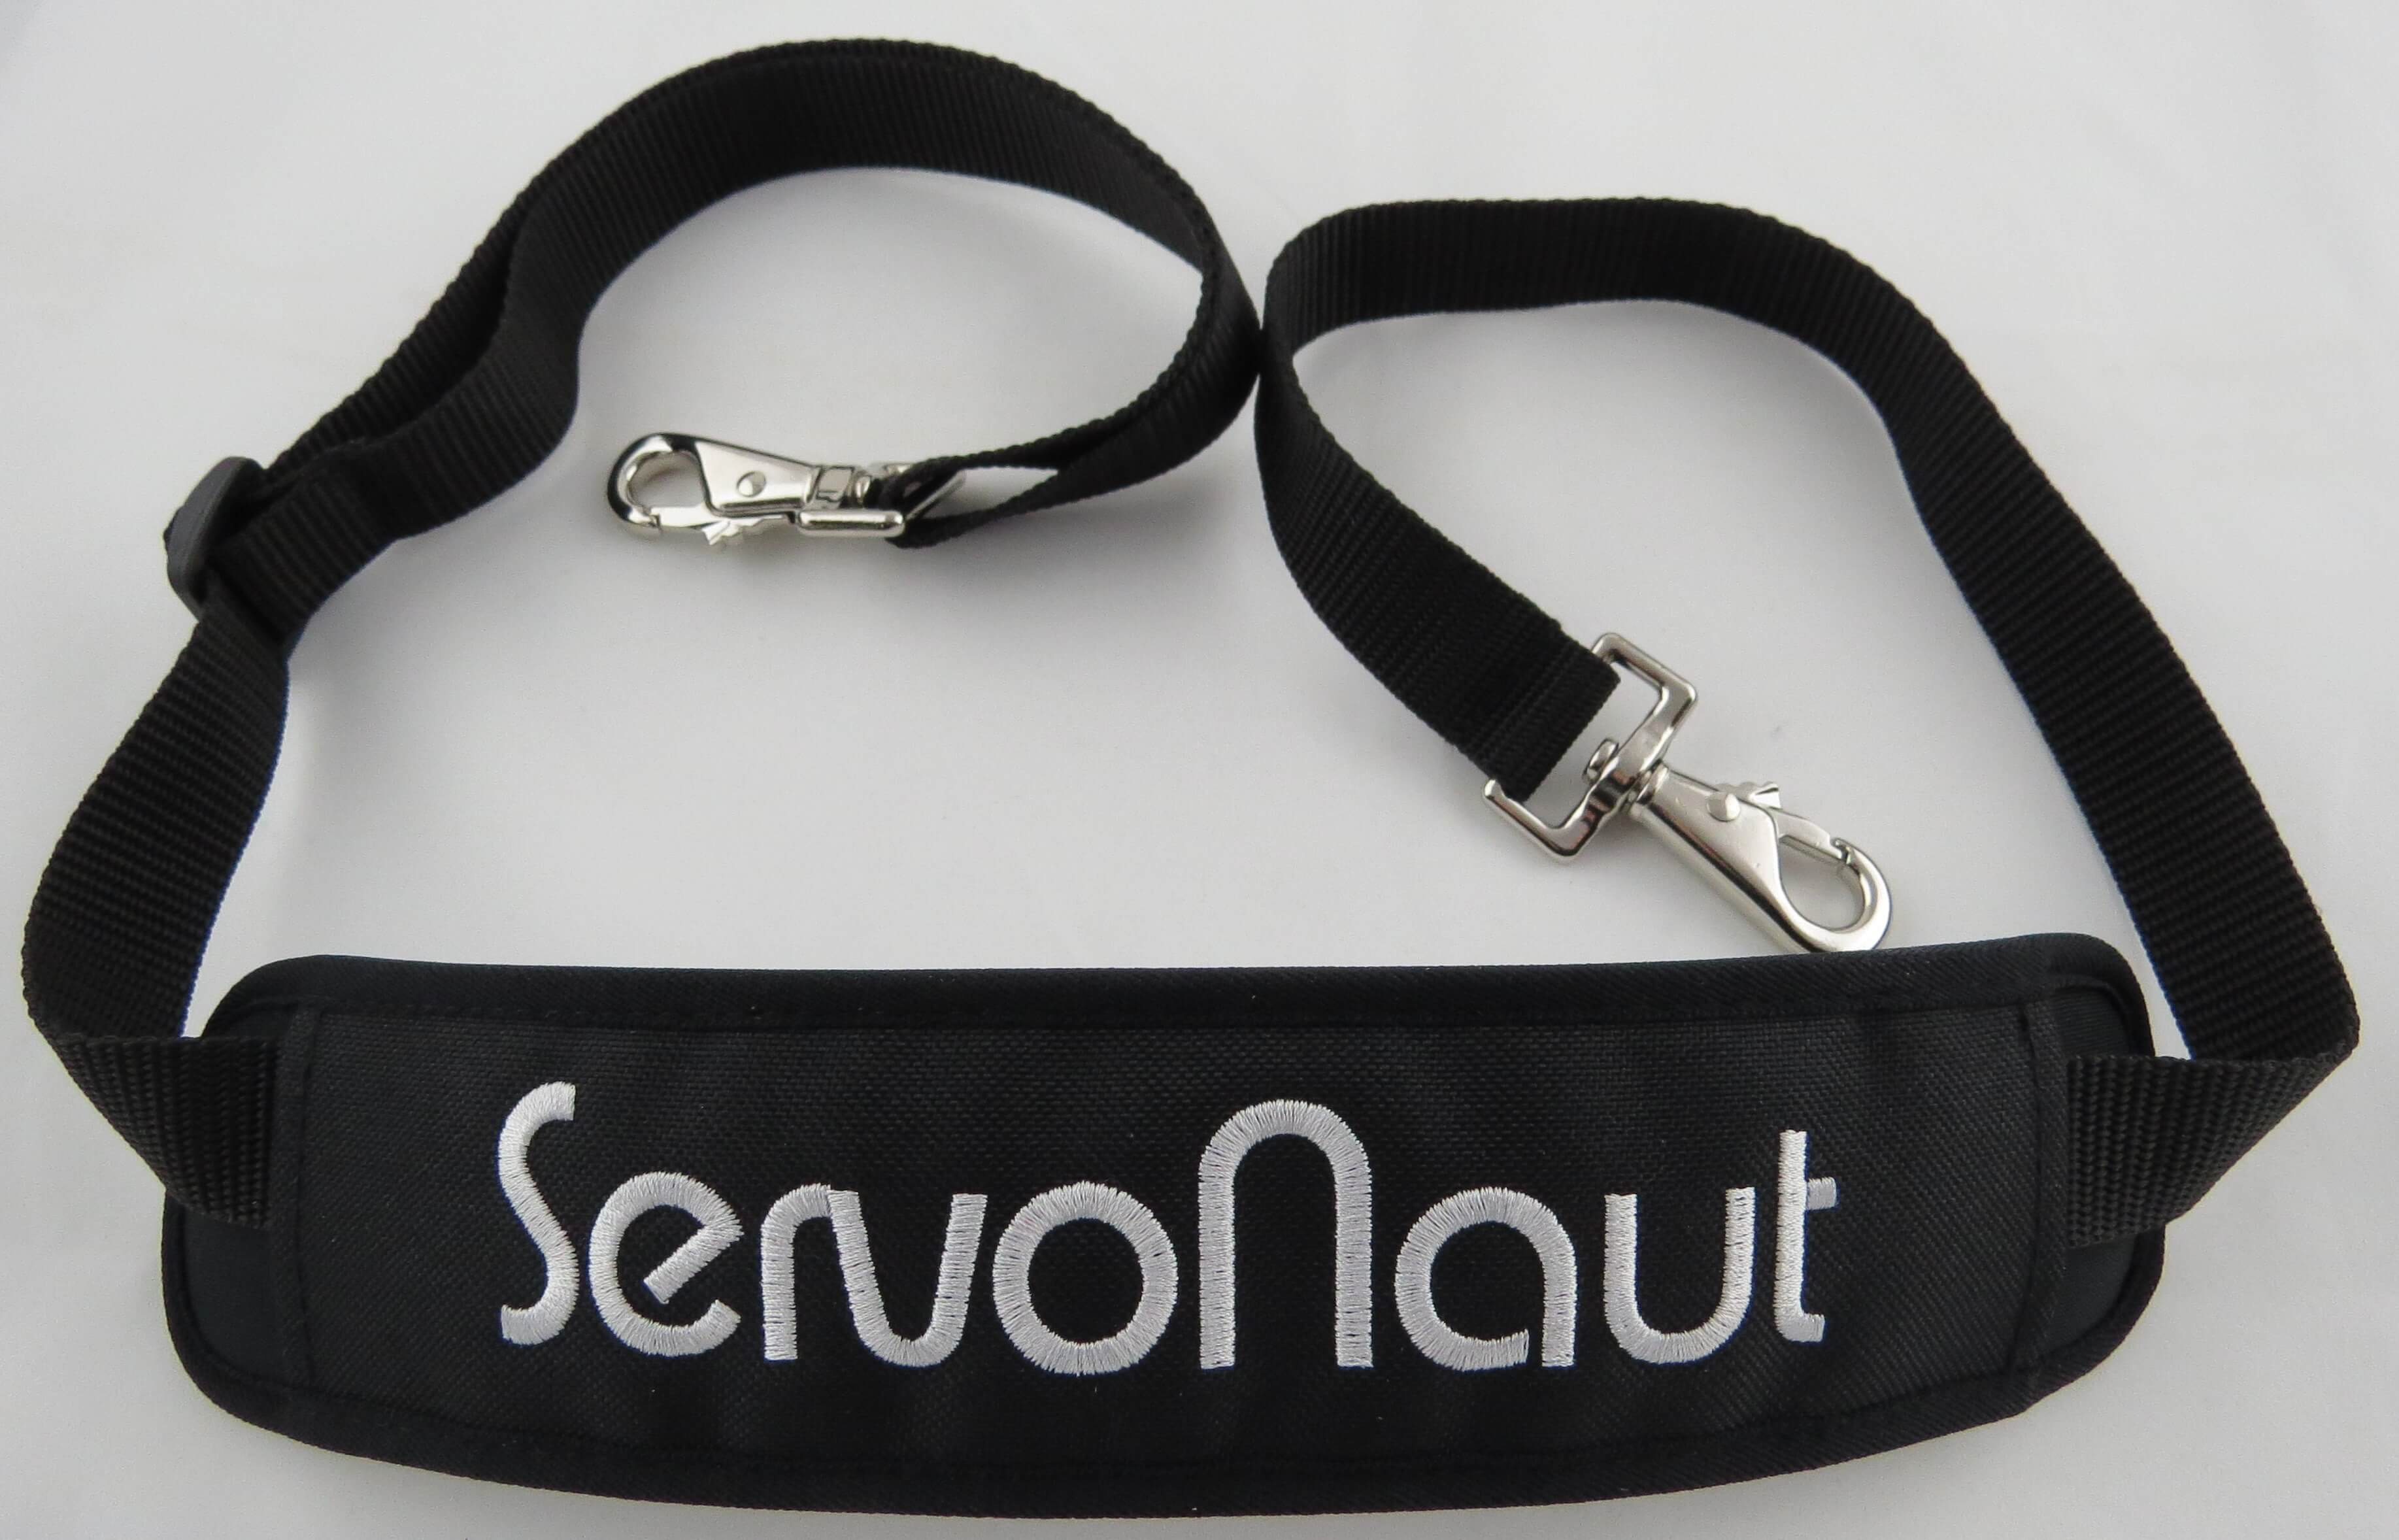 1x strap for console / desk station of Servonaut, Servonaut, equipment, RC Product